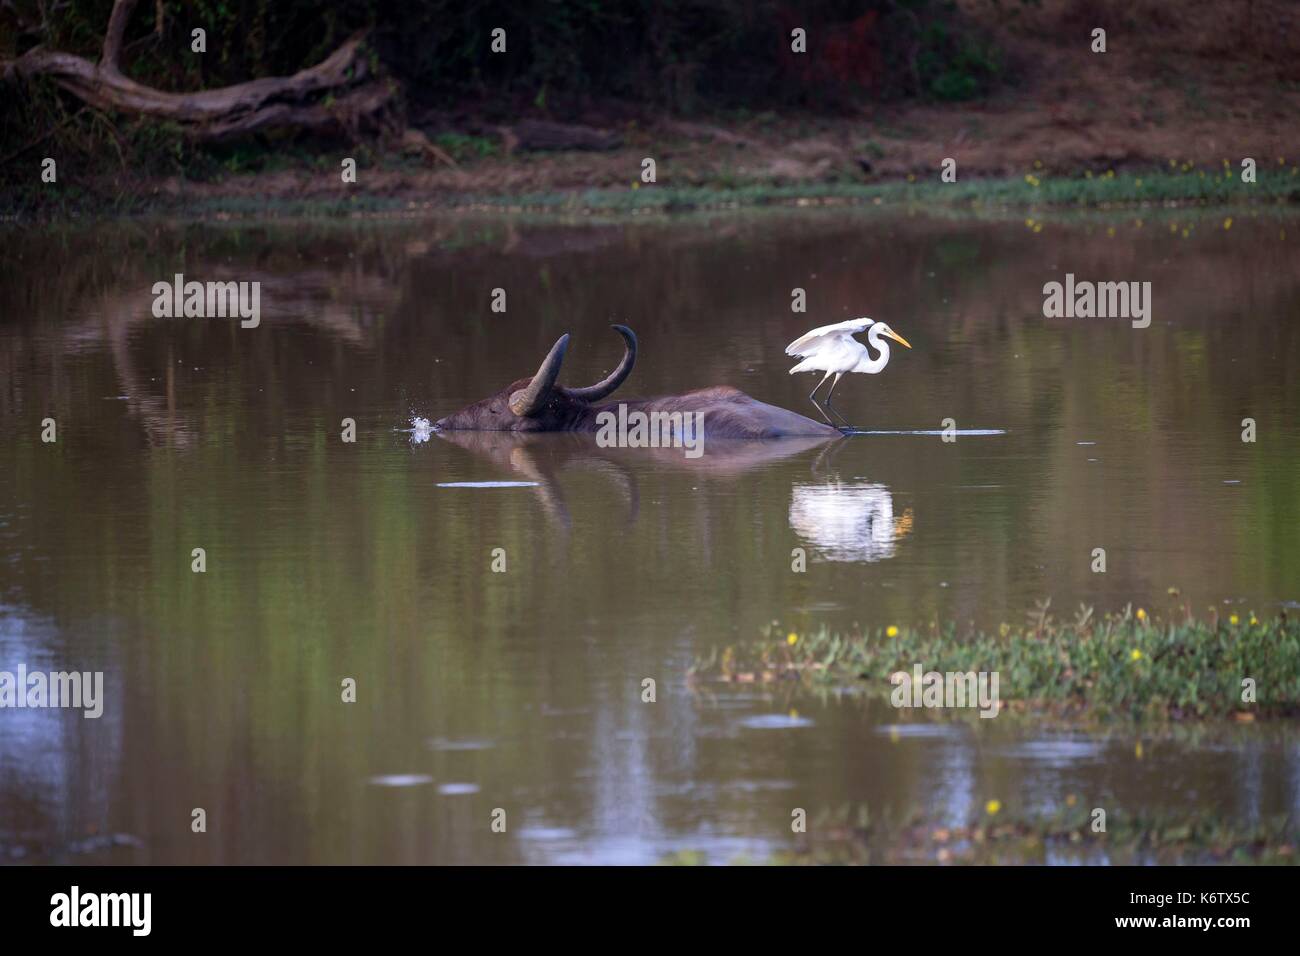 Sri Lanka, Yala national patk, Wild water buffalo or Asian buffalo (Bubalus arnee), resting in the water, with a great egret (Ardea alba) on the back Stock Photo